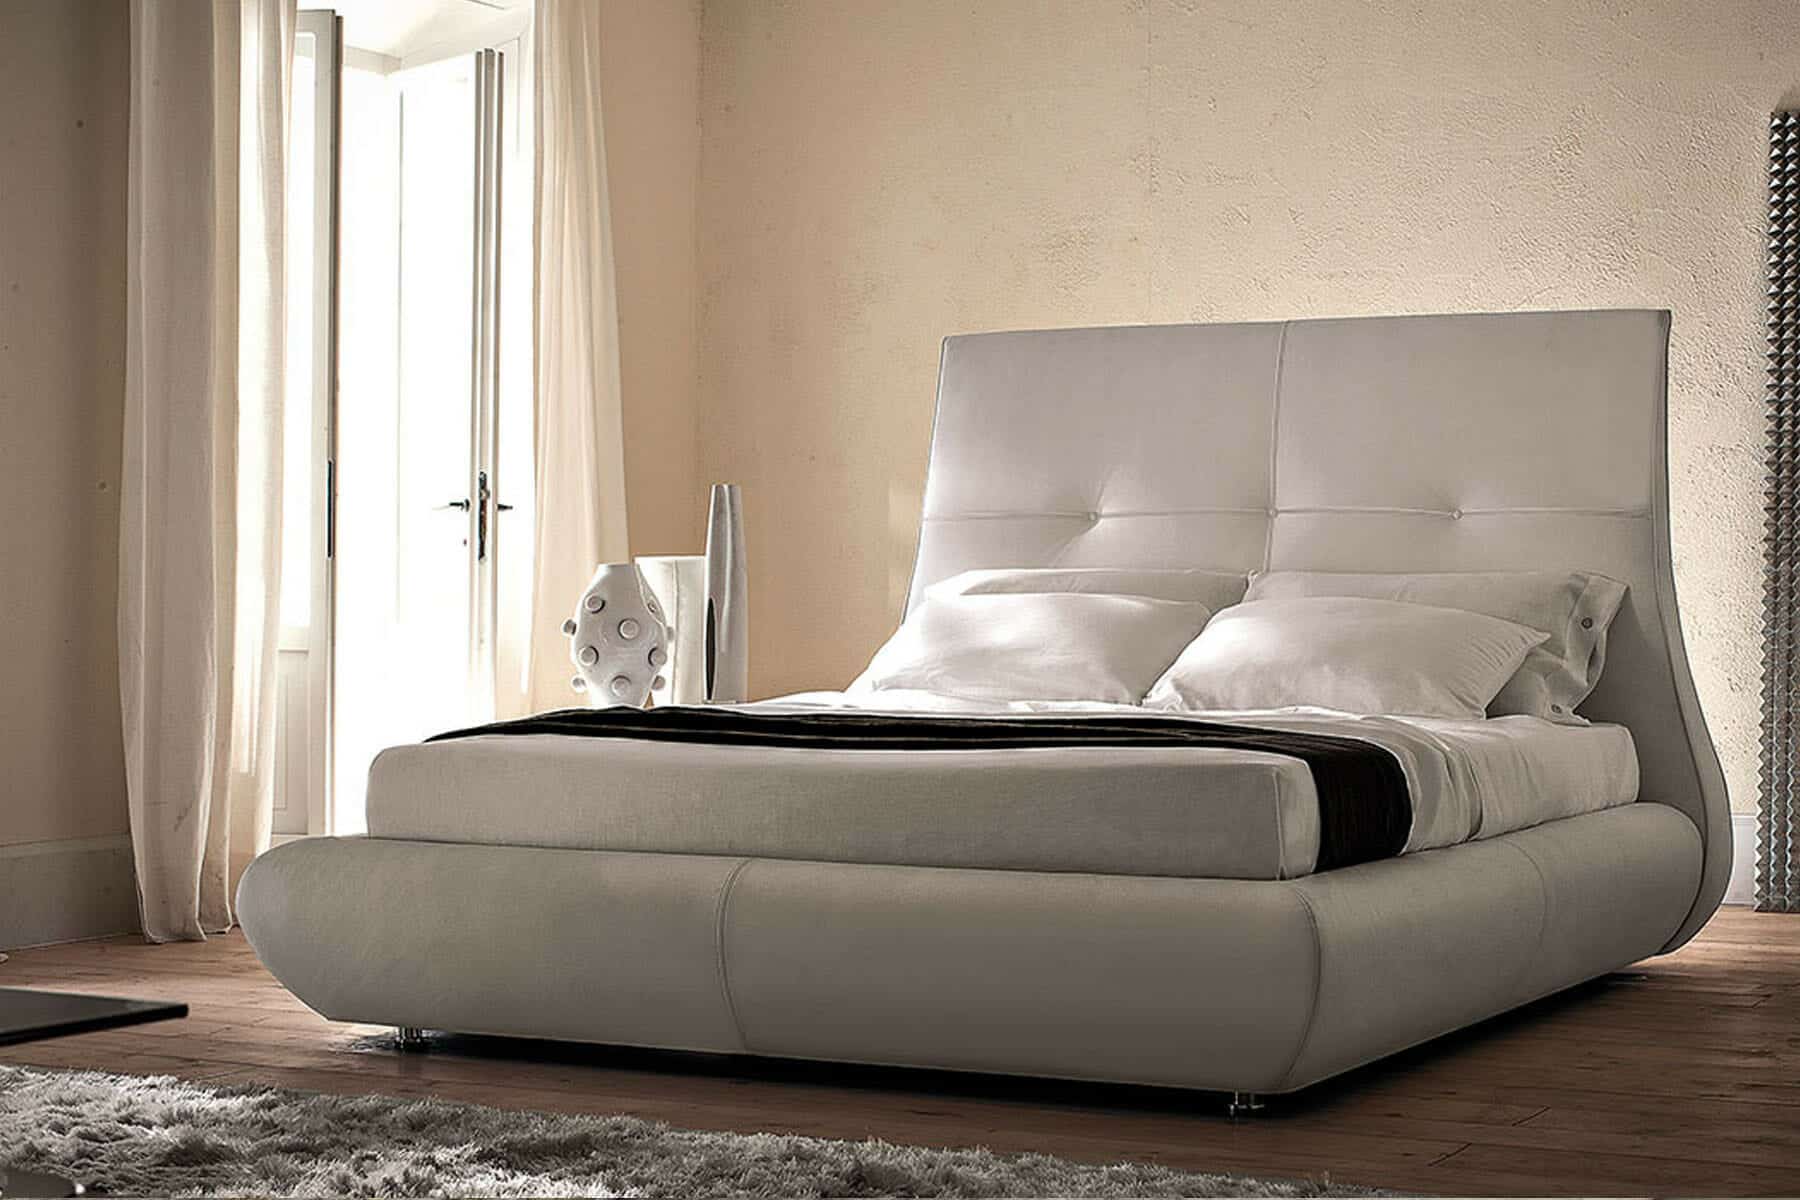 Unique Modern Light Gray Bed Frame from San Francisco Design